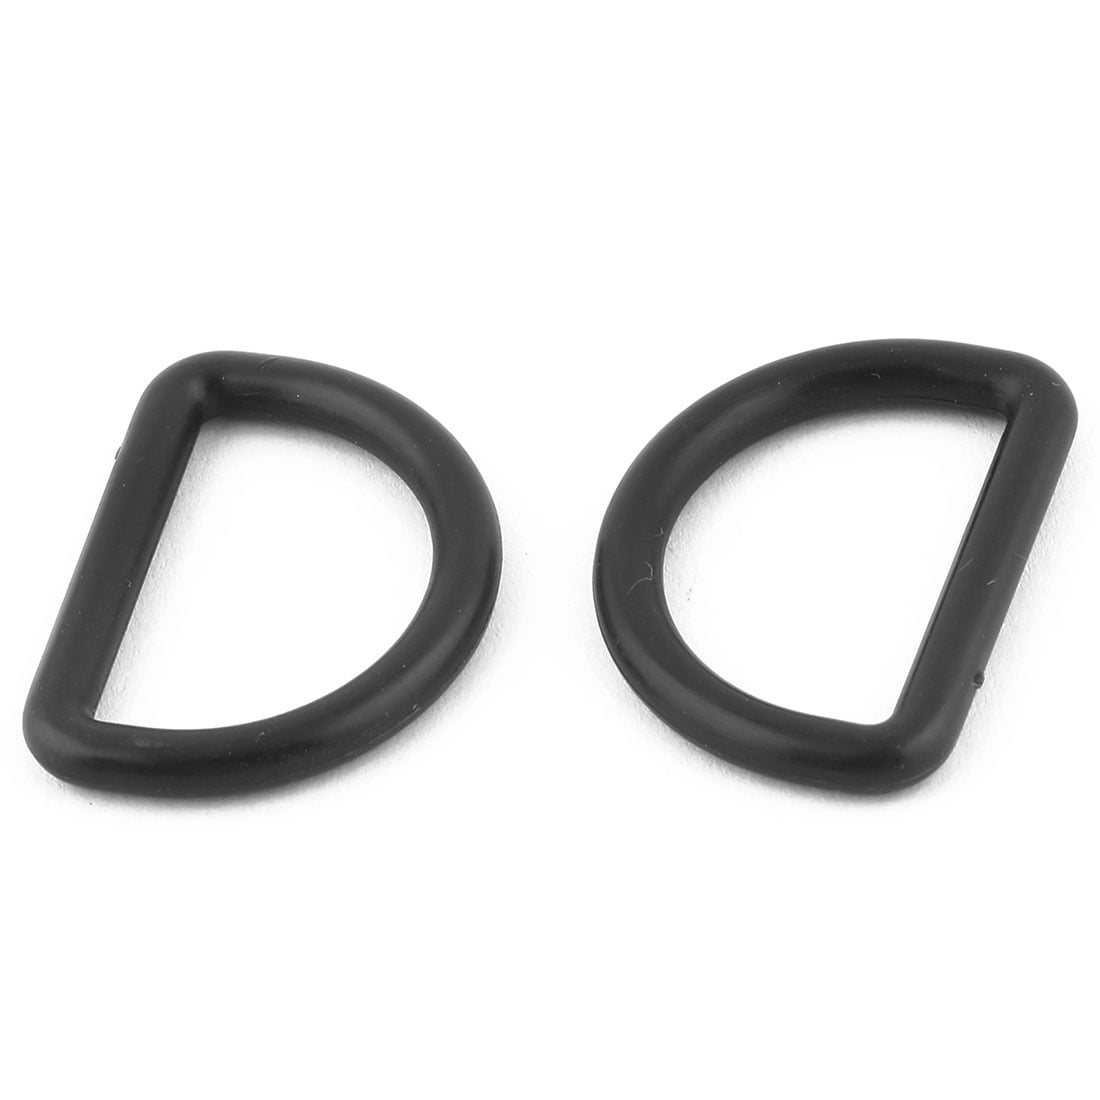 Backpack Plastic D Shaped Webbing Adjustive Connecting Loop Ring Black ...